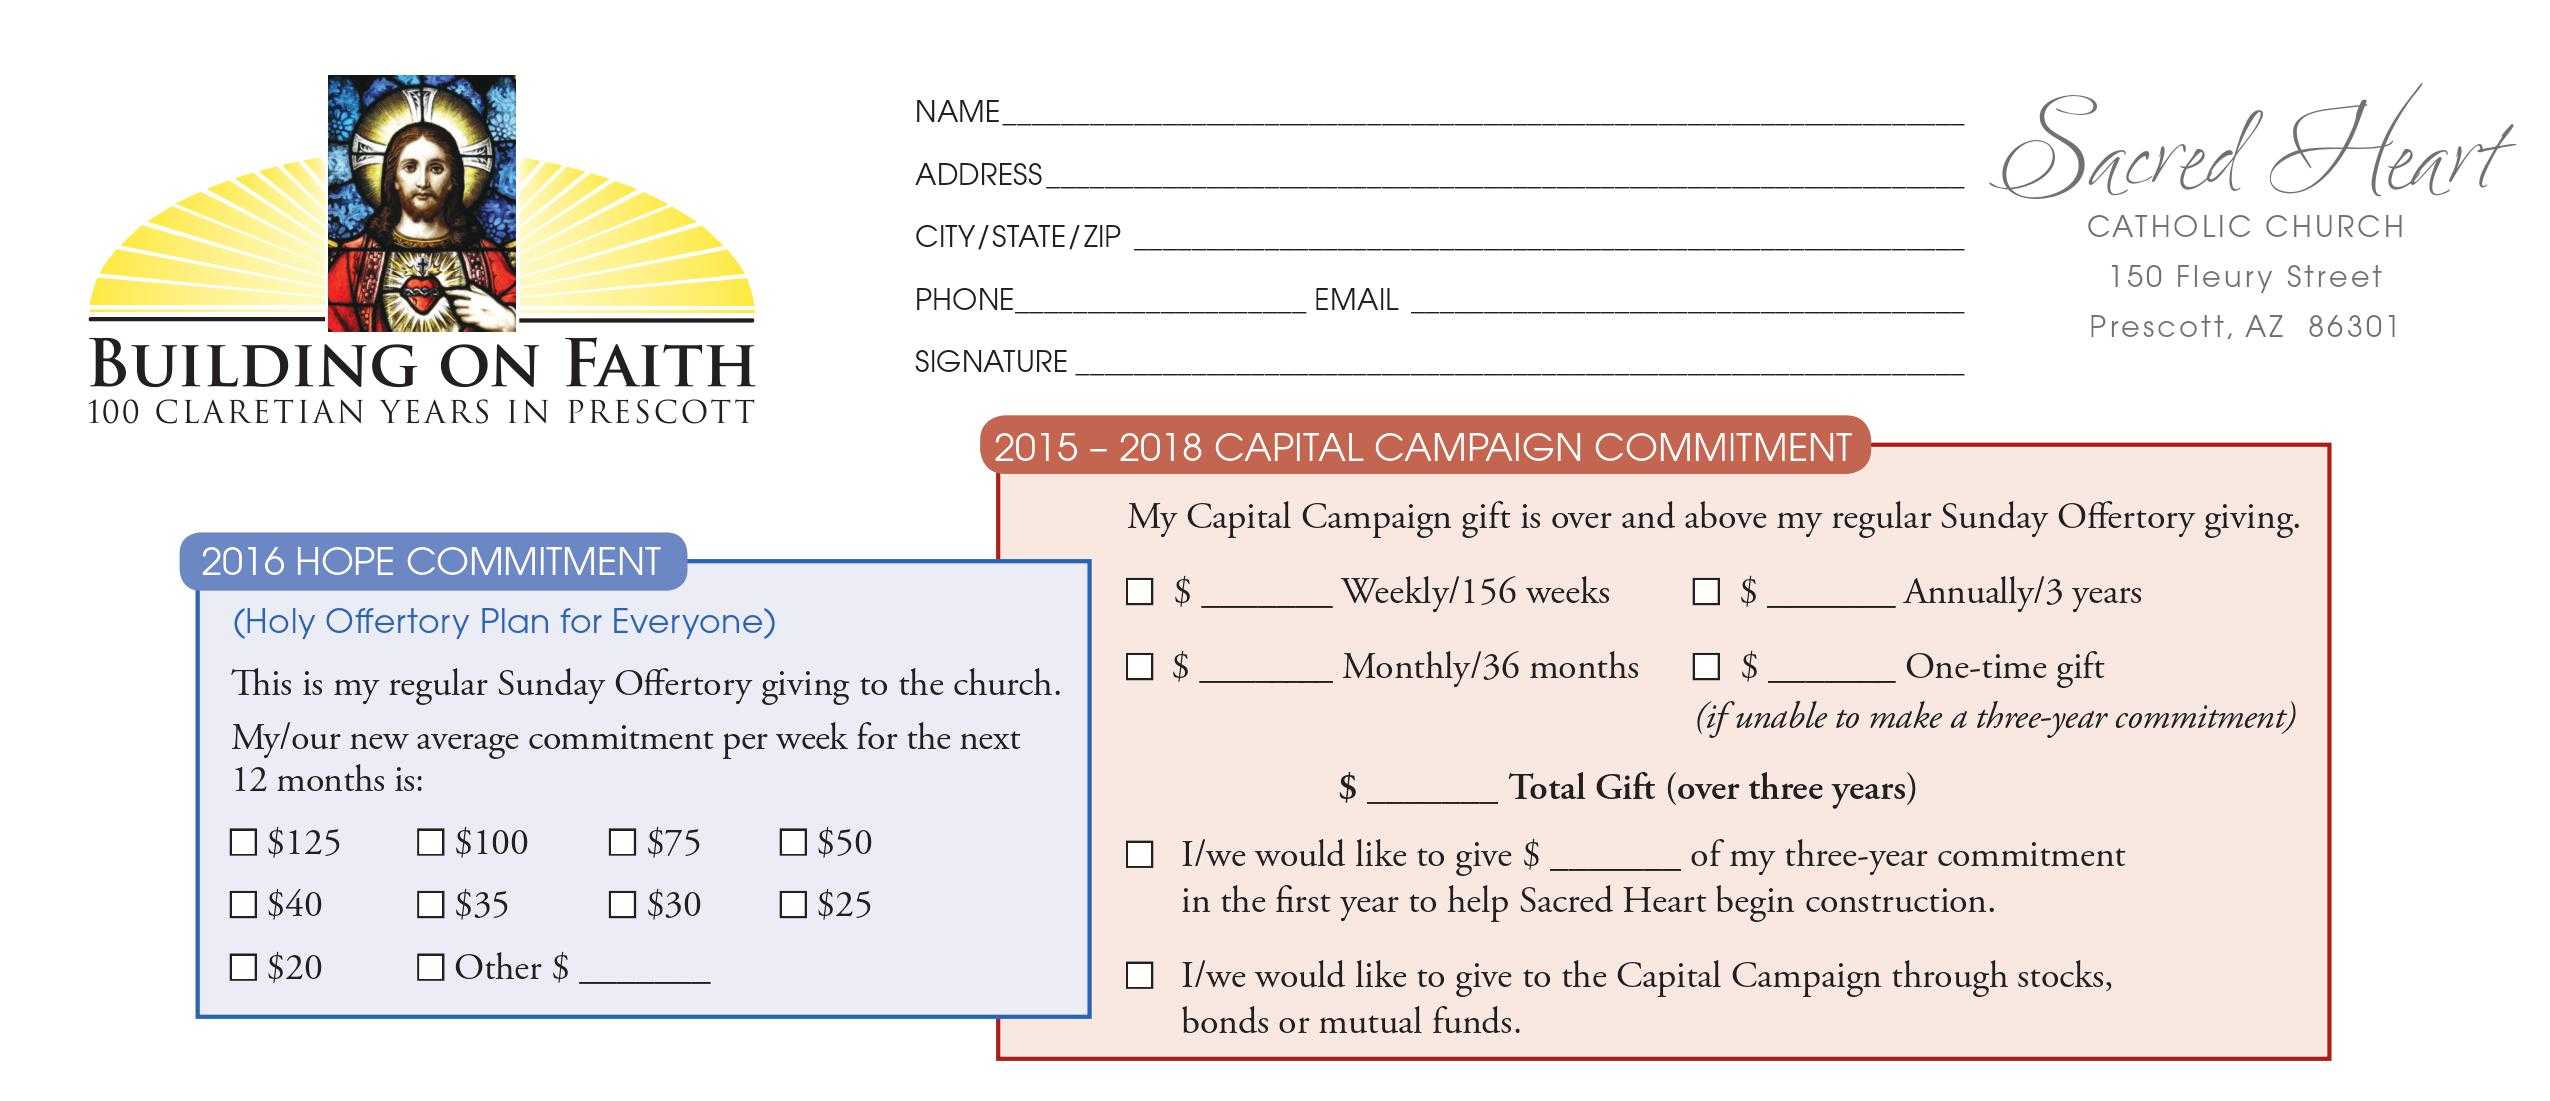 Church Capital Campaign Pledge Card Samples Within Pledge Card Template For Church